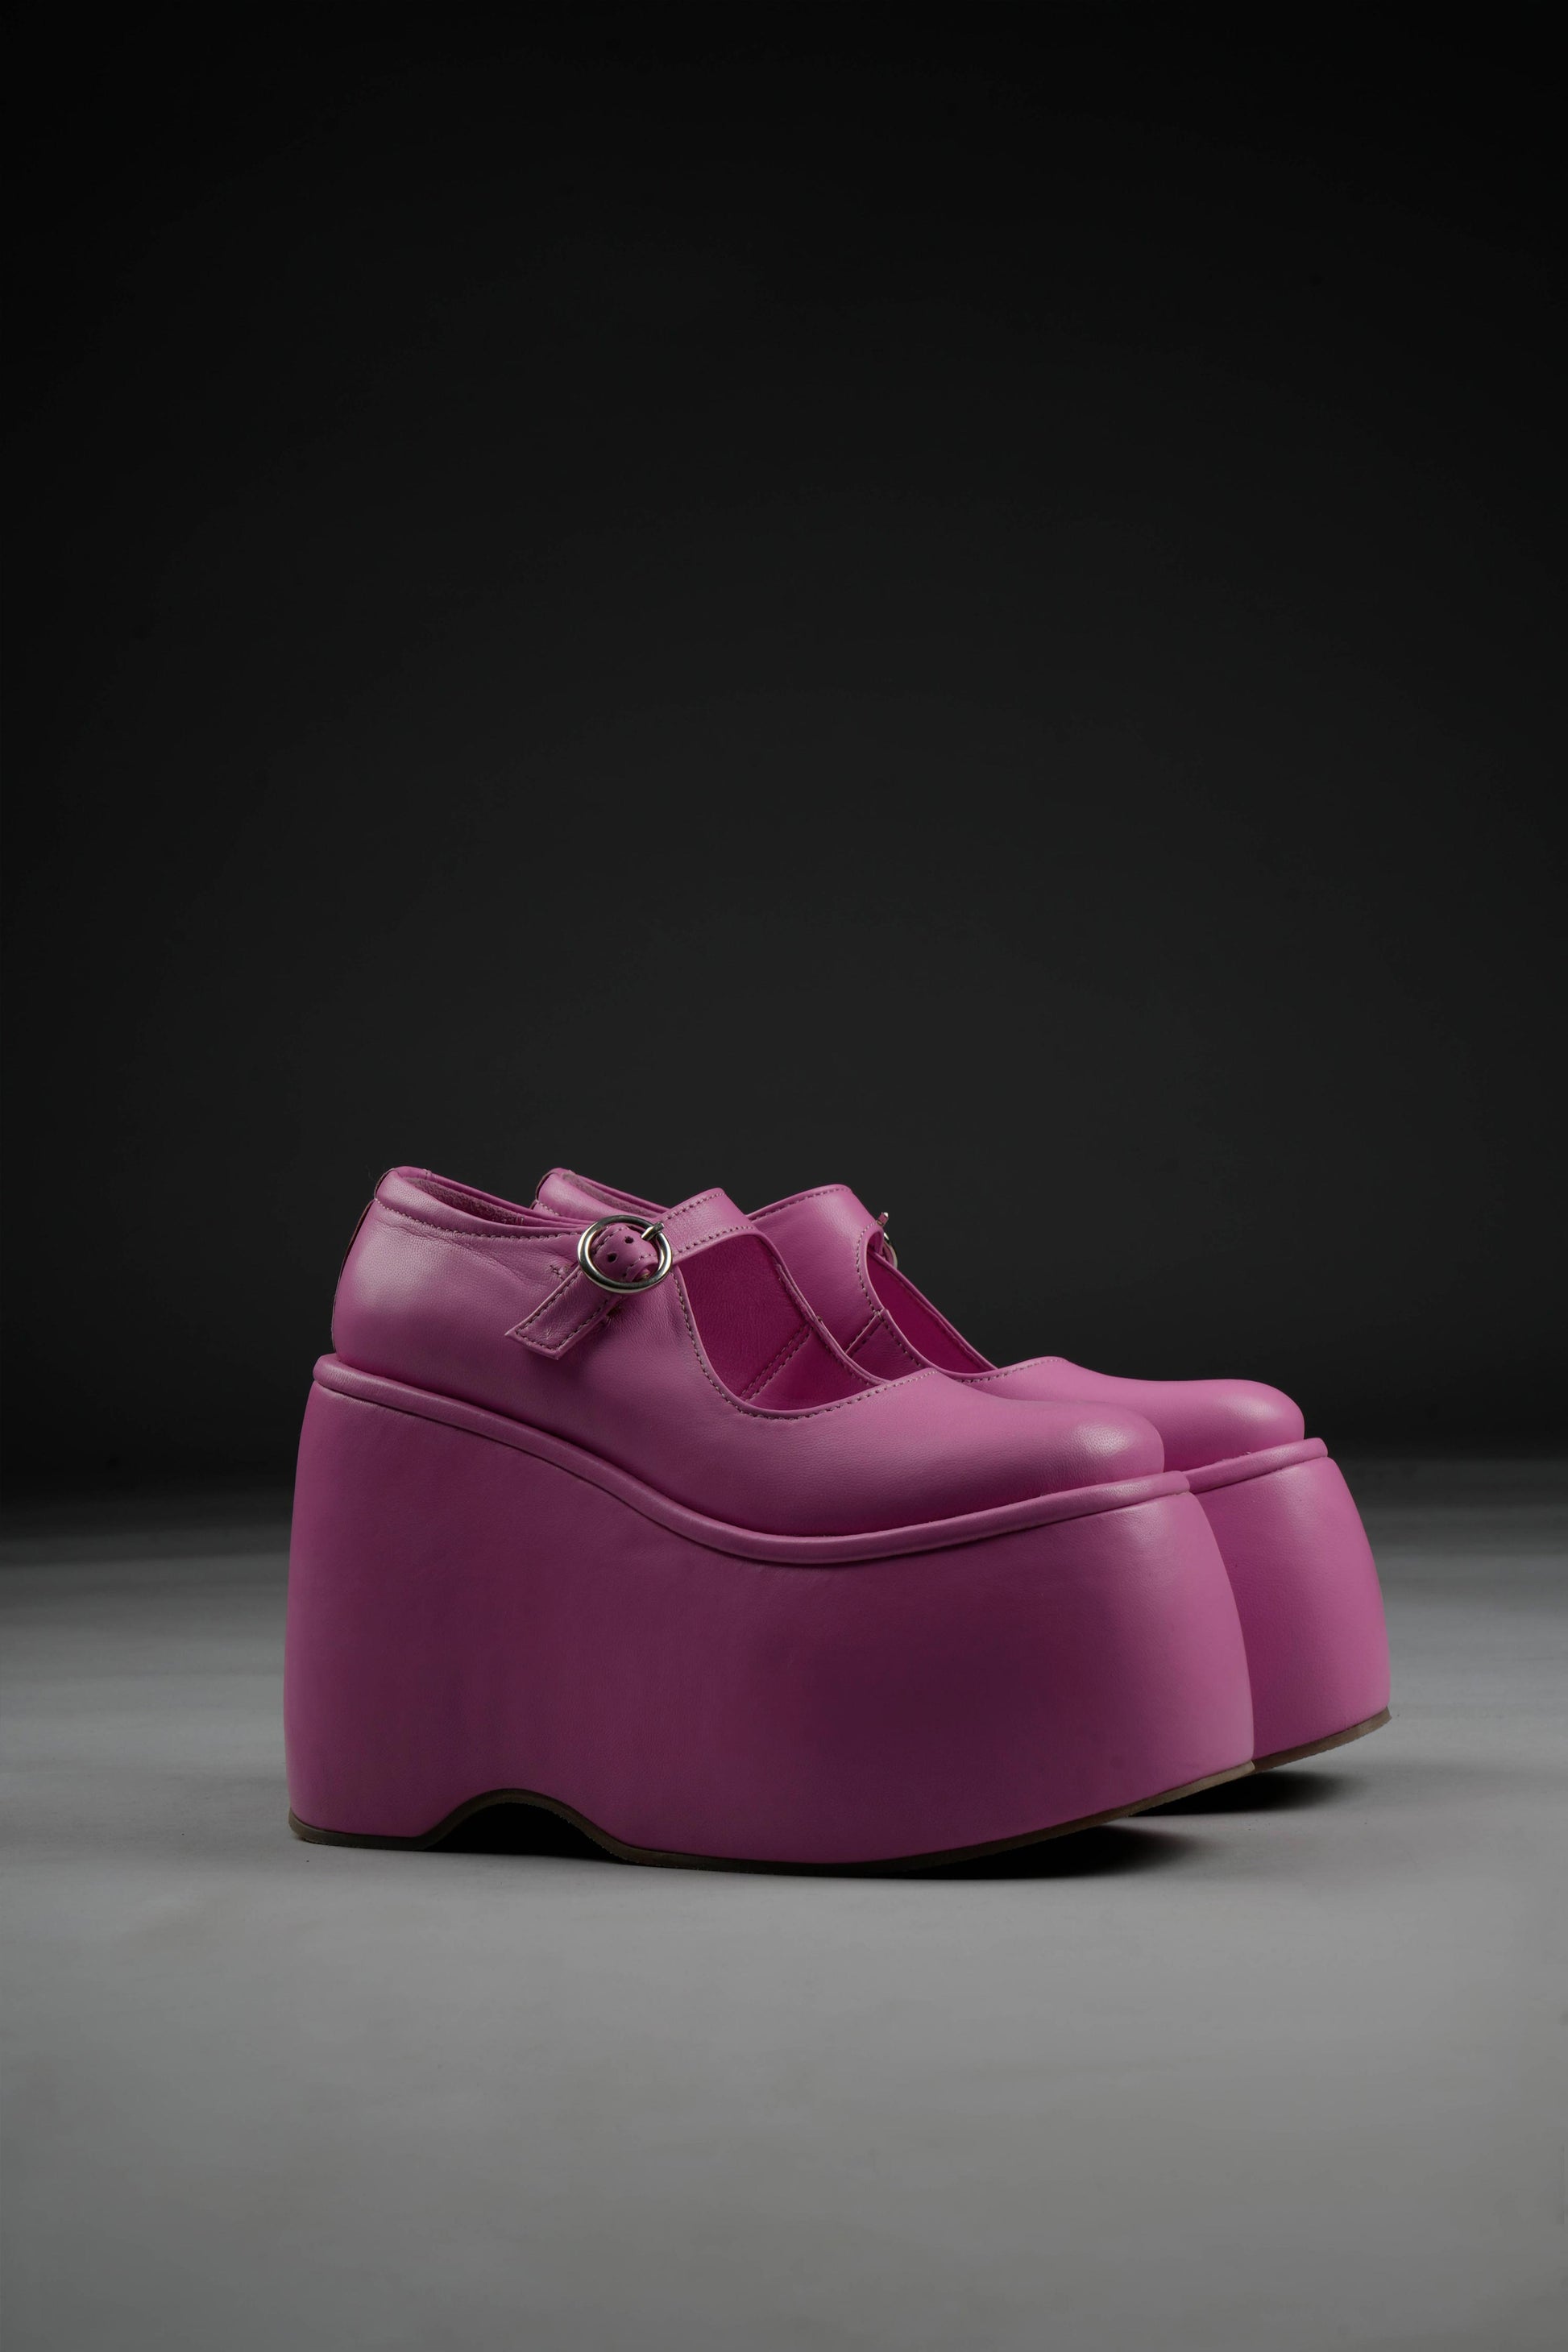 Janet High heels women shoes